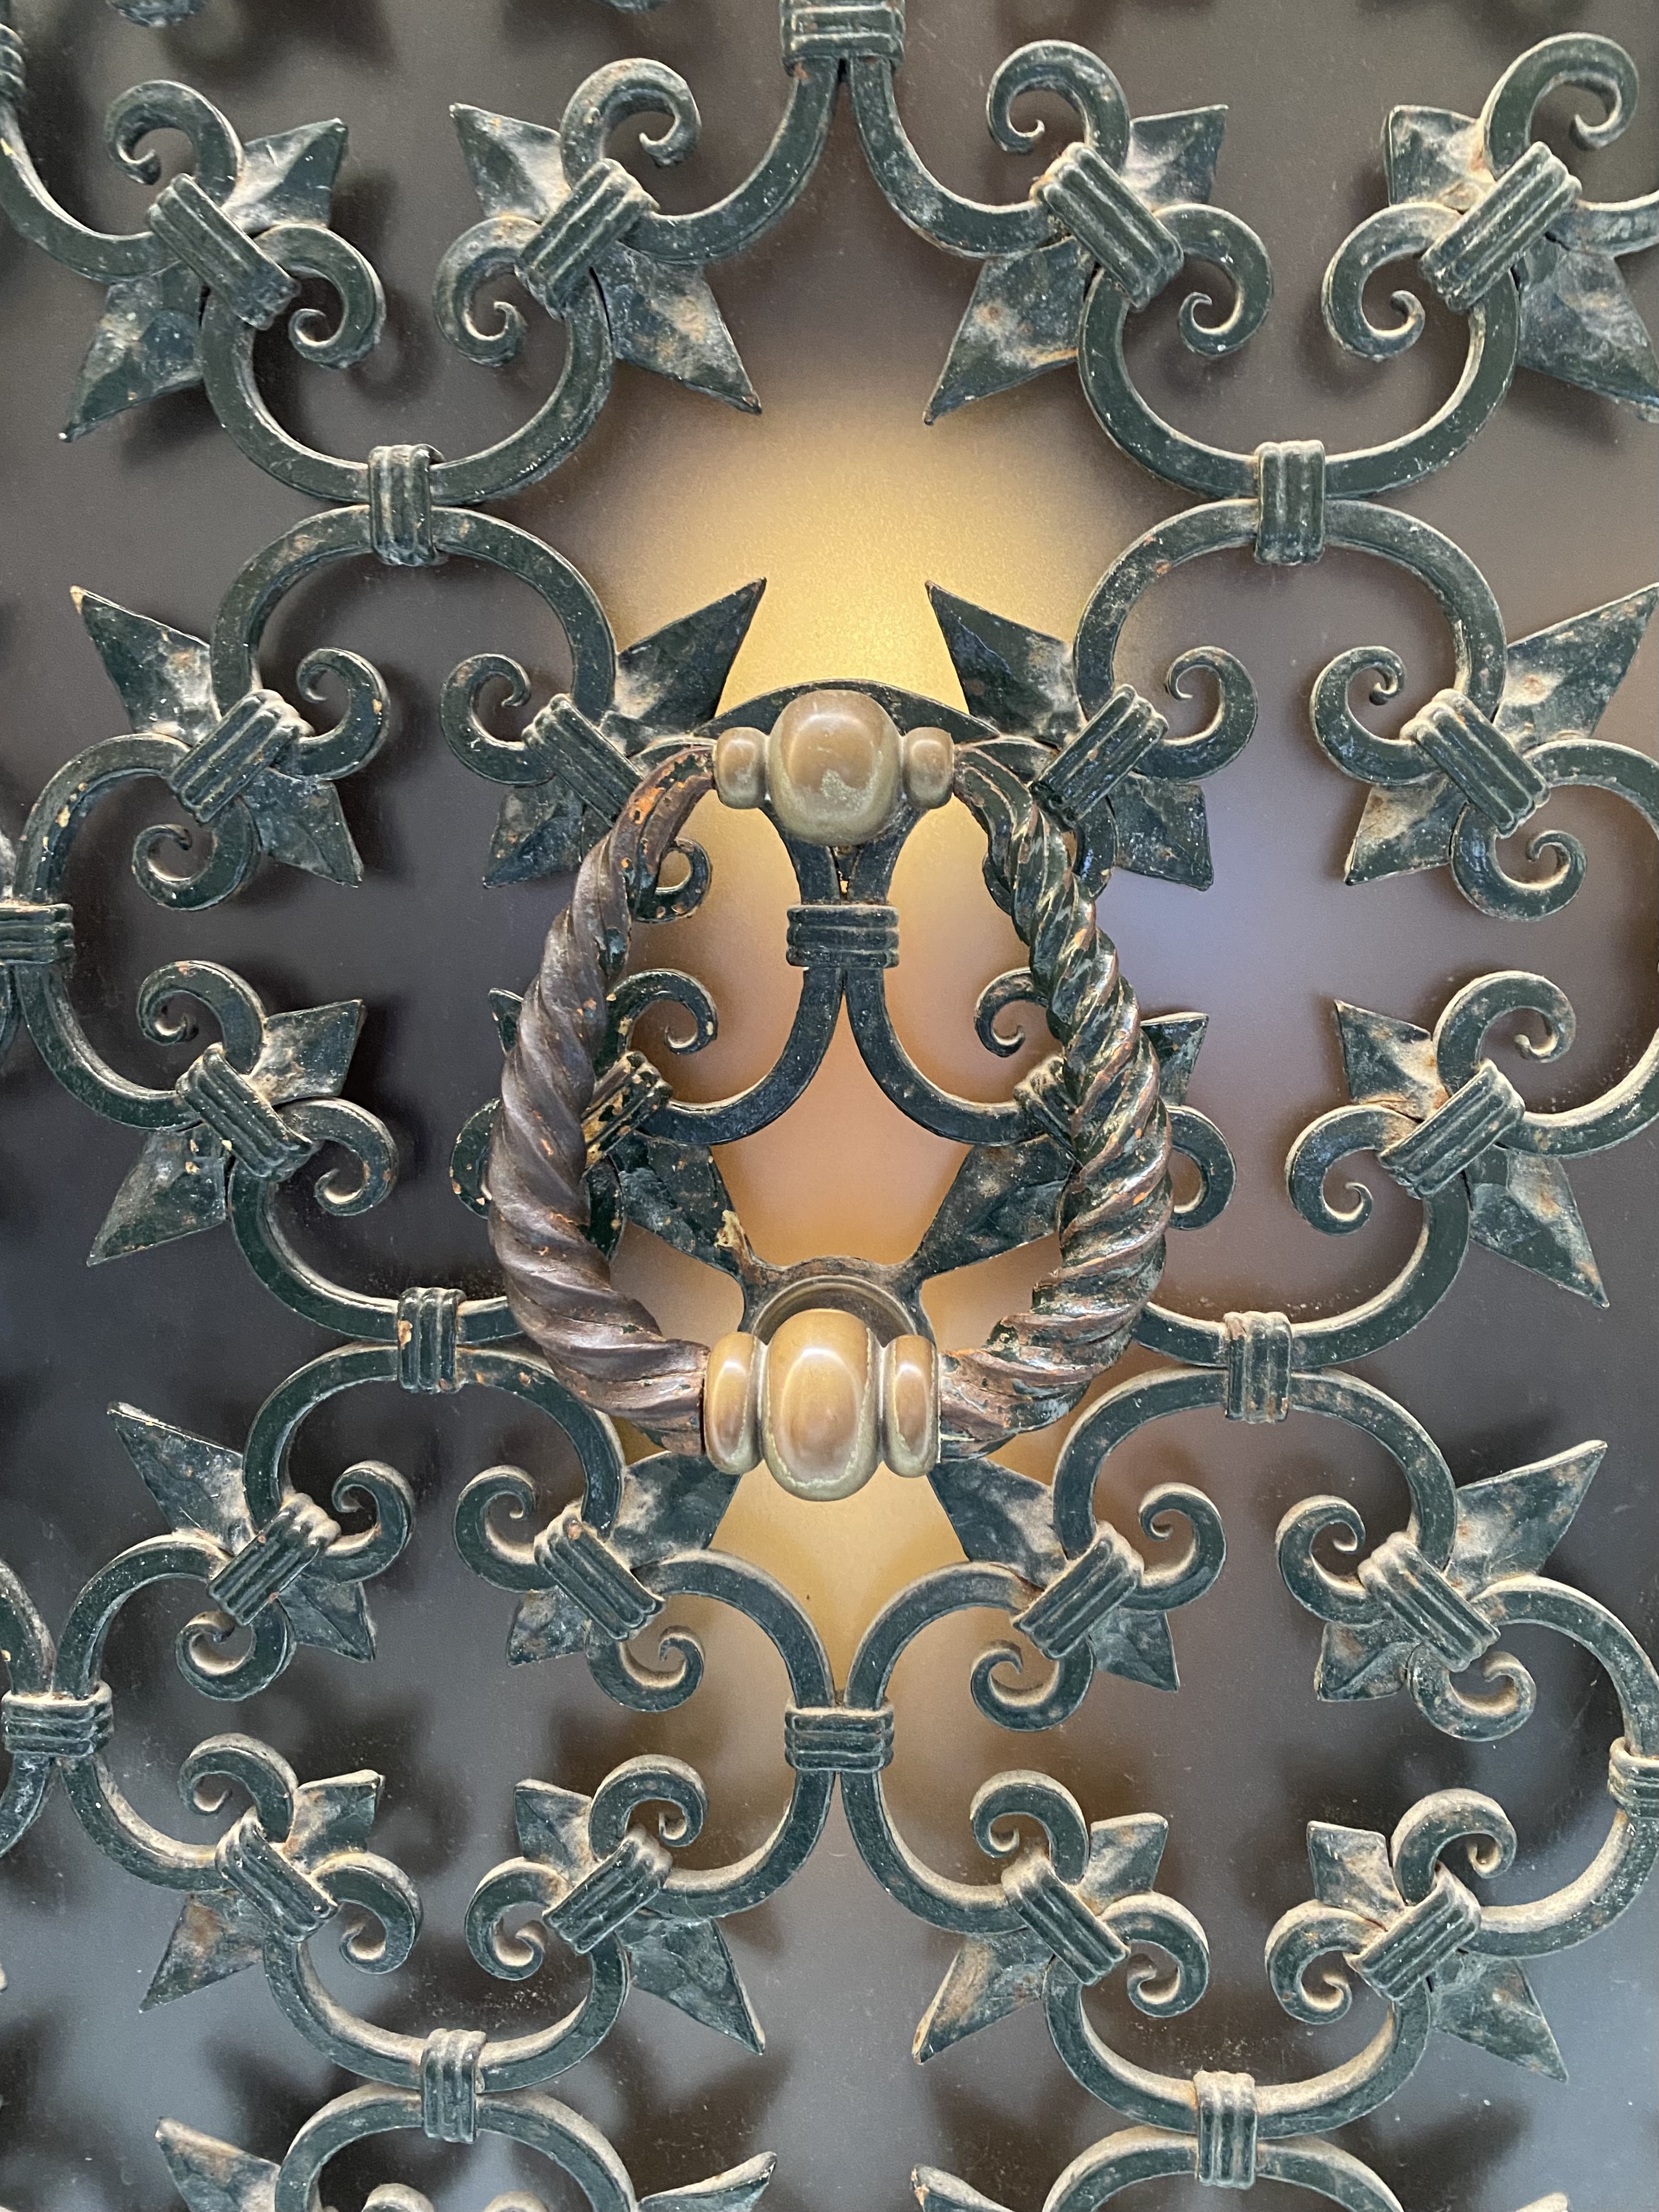 Ornate design on a door in Venice Italy